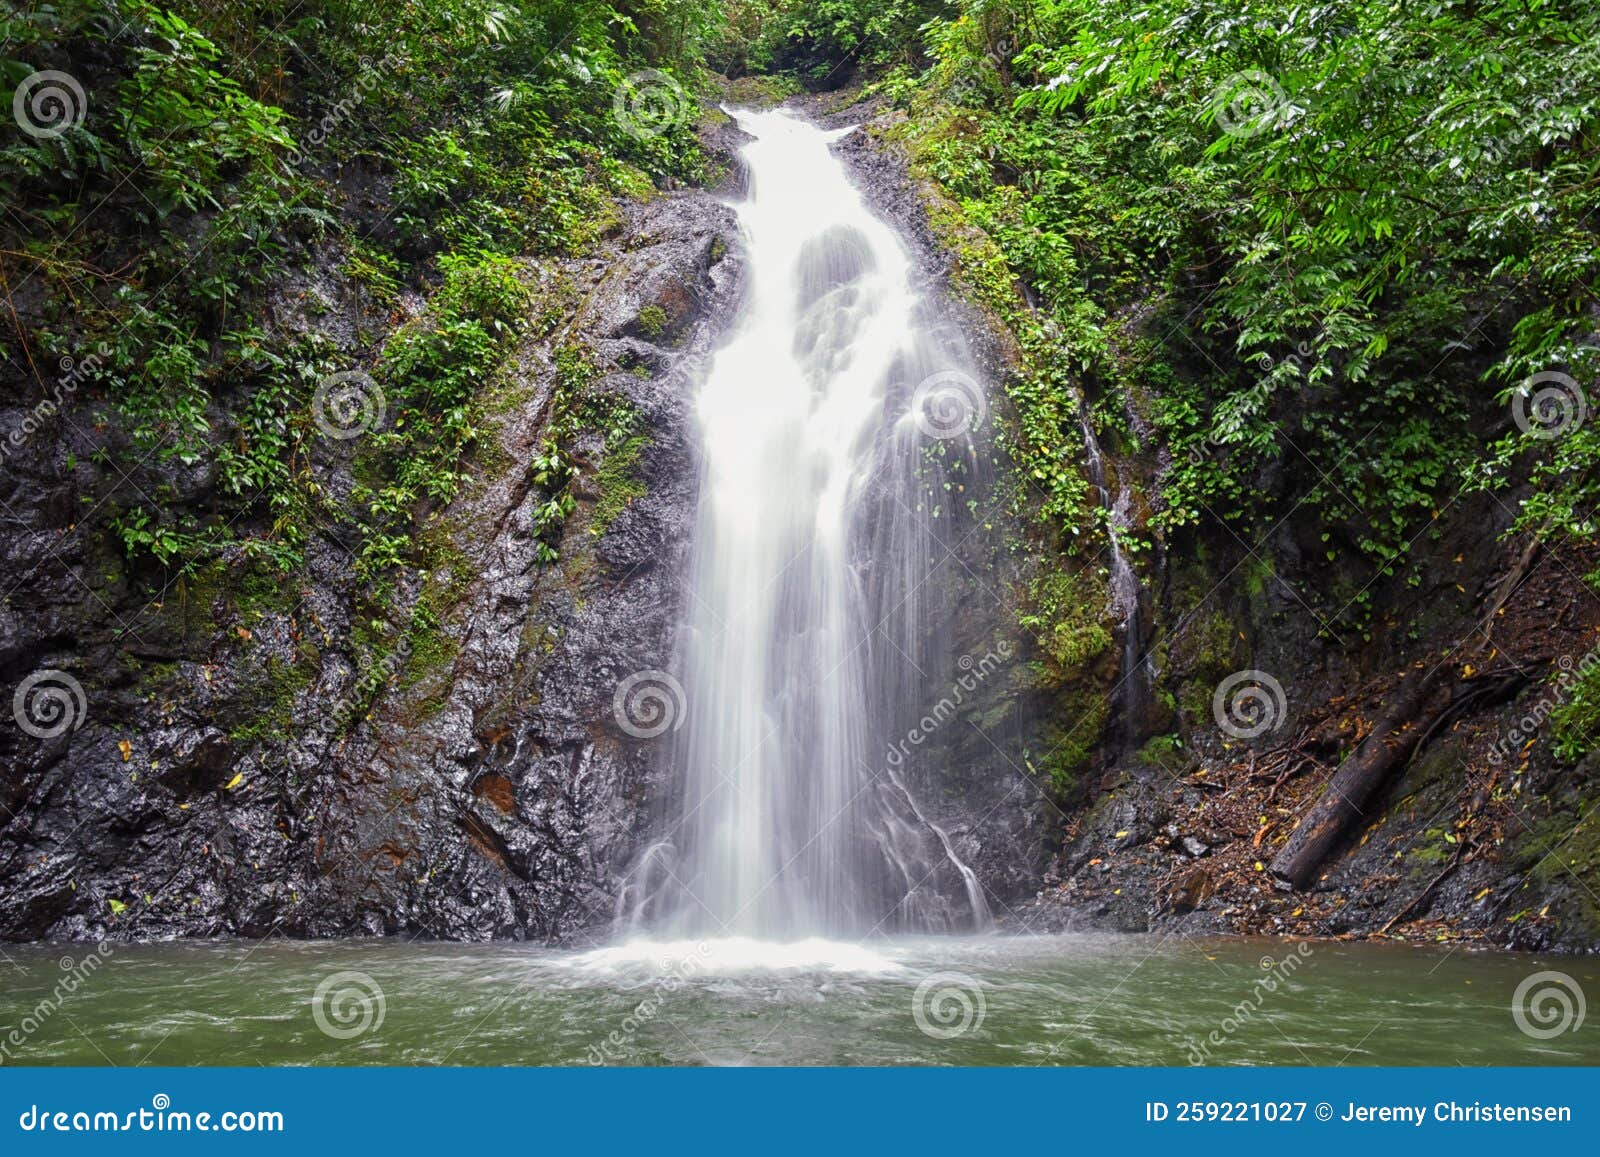 waterfall jaco costa rica, catarastas valle encantado - hidden waterfall surrounded by green trees, vegetation, rocks, leaves floa